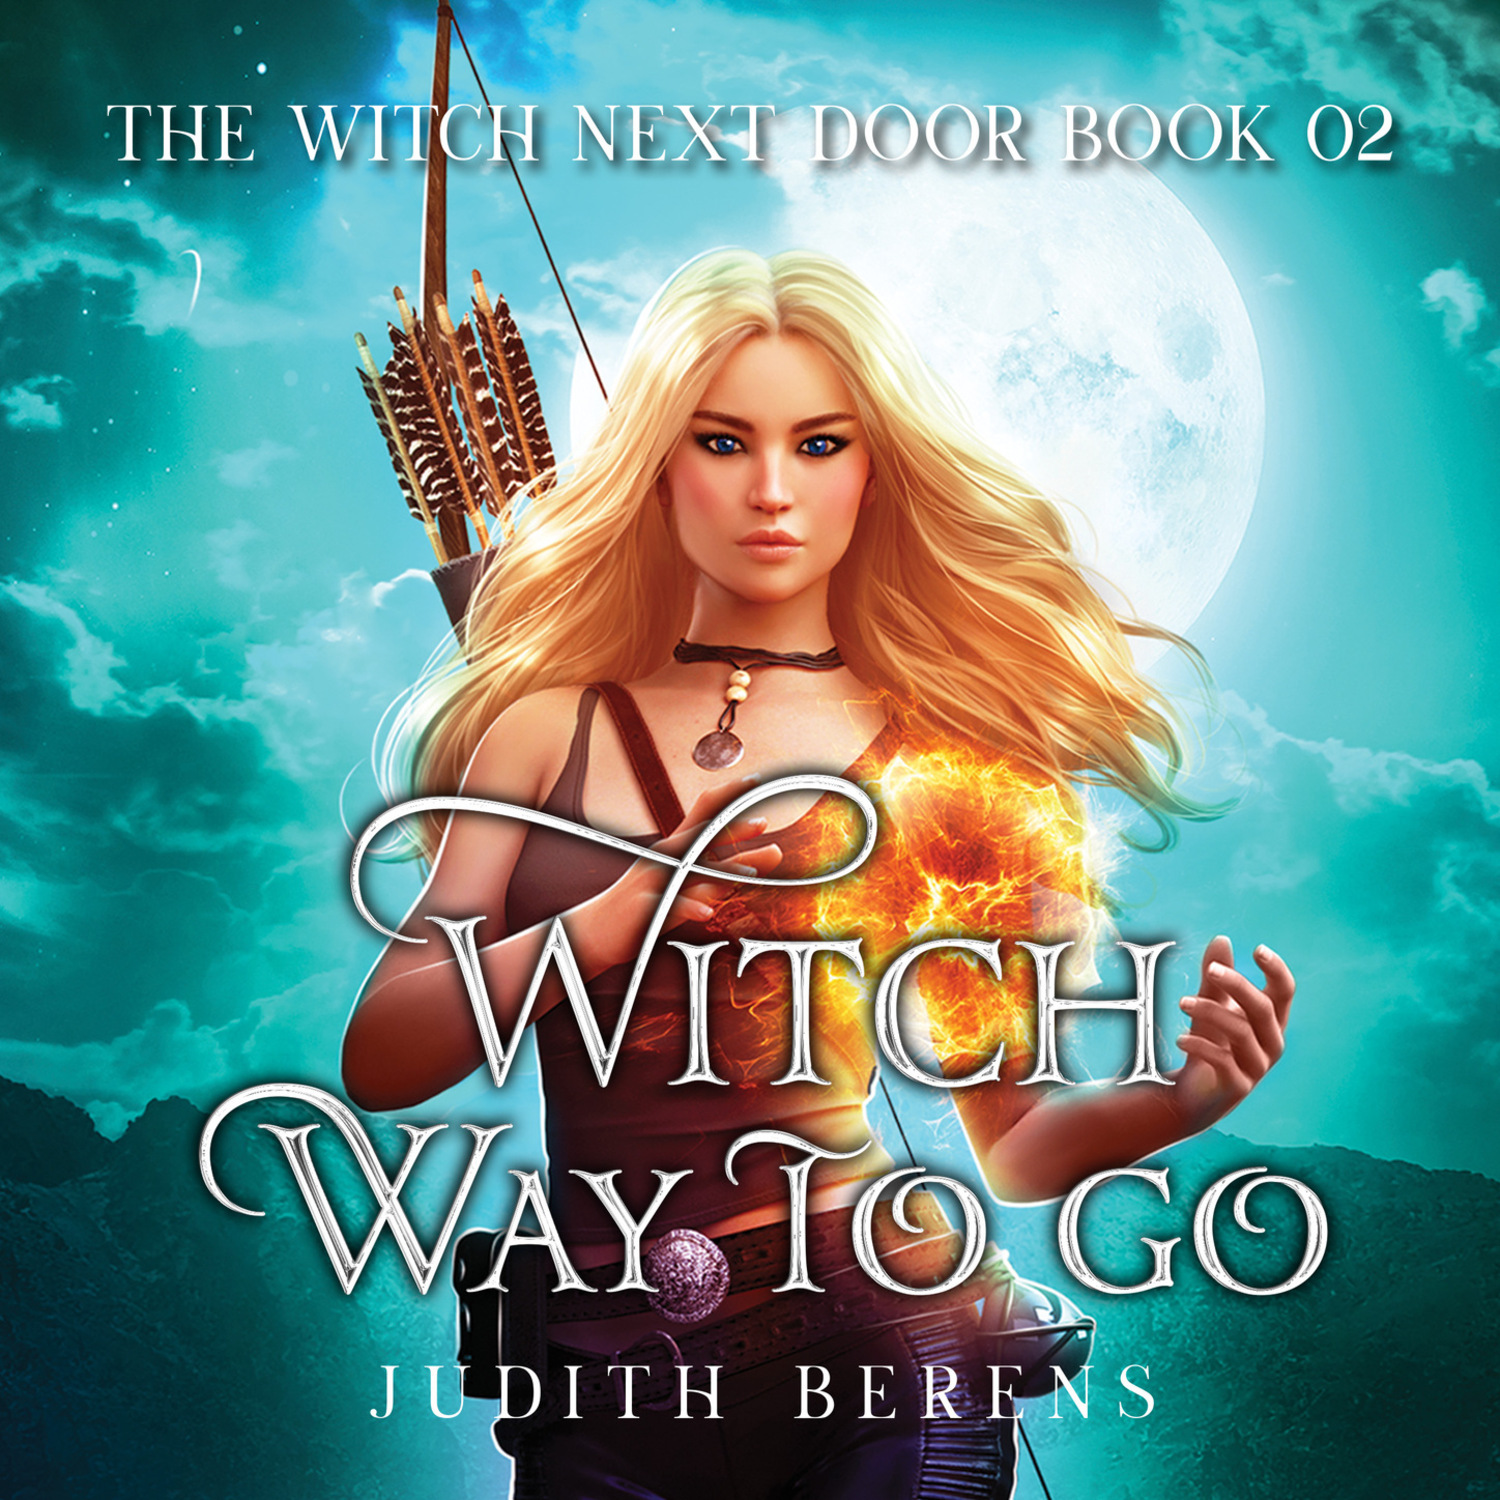 Michael Anderle Audiobook Witch Way To Go The Witch Next Door Book 2 Unabridged Listen To